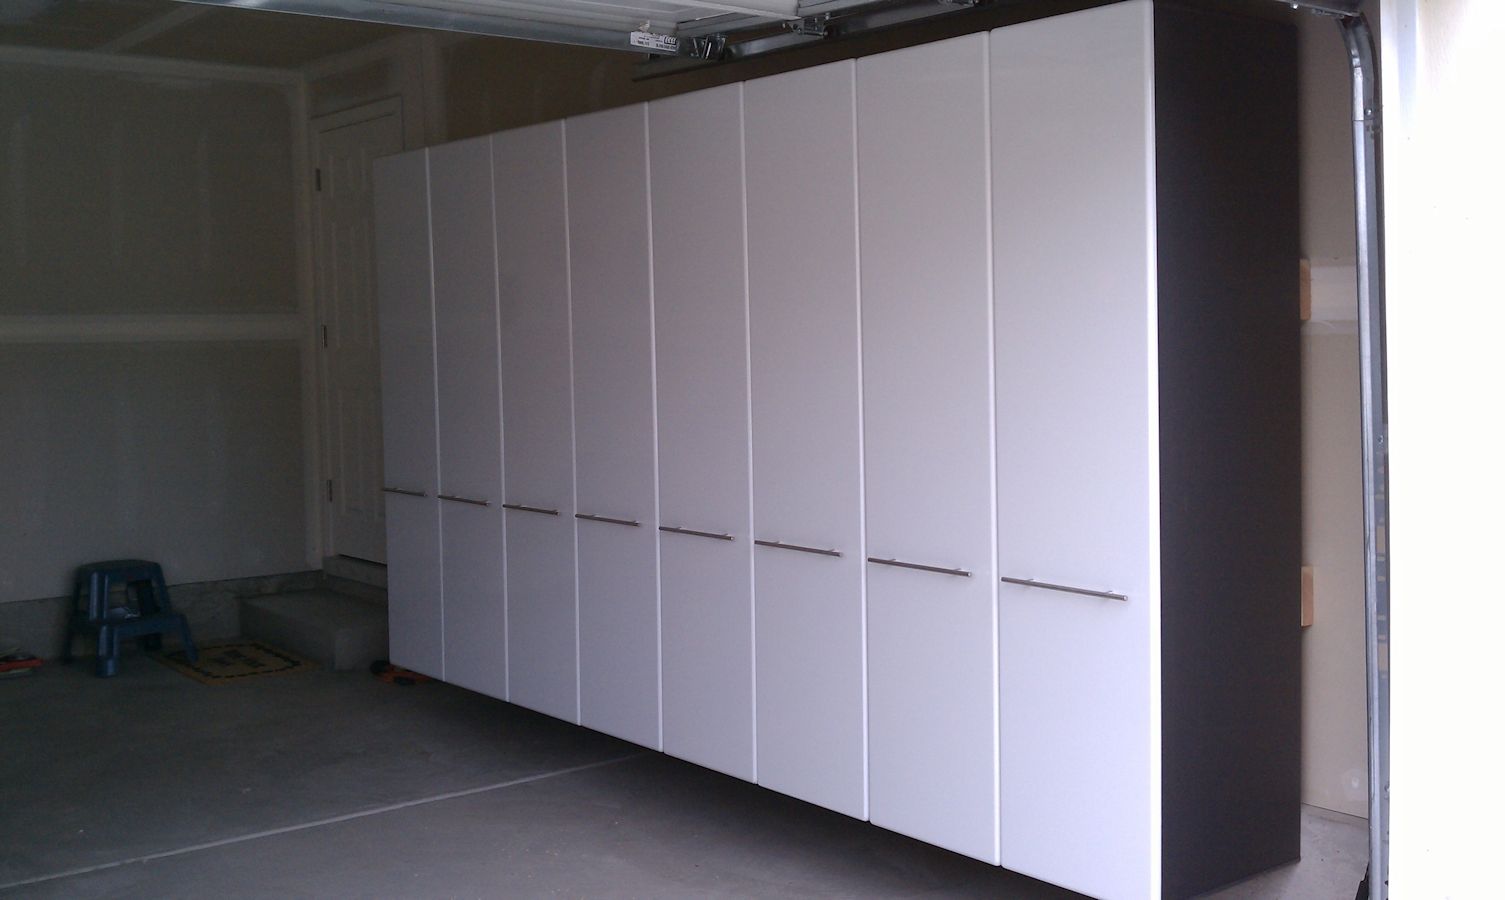 Ulti-mate Storage Cabinets